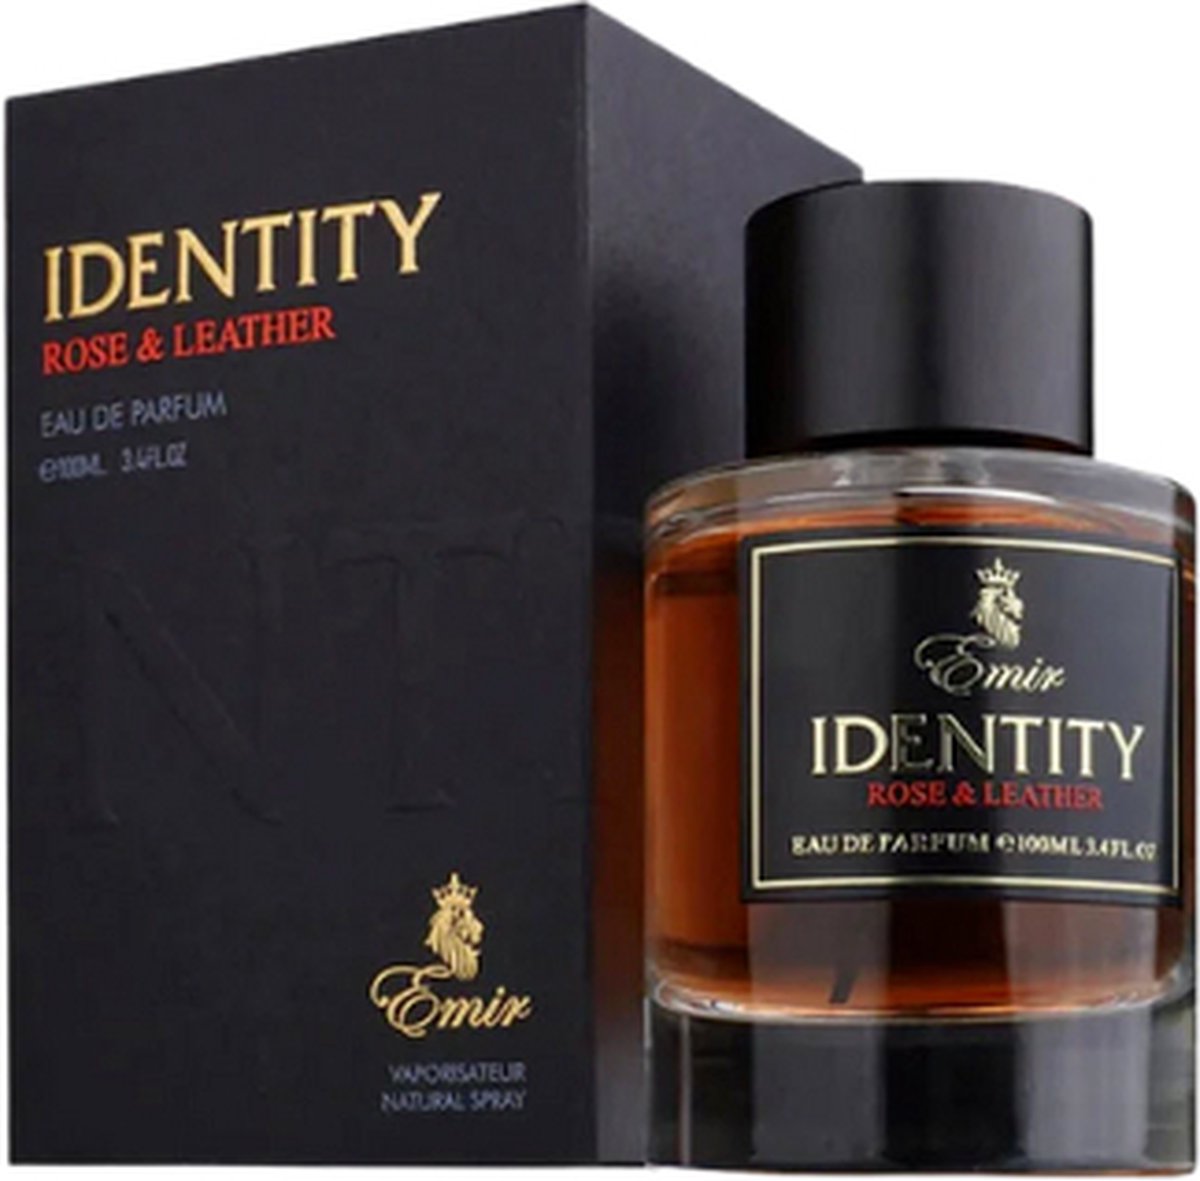 Emir Identity Rose & Leather Eau de Parfum 100ml